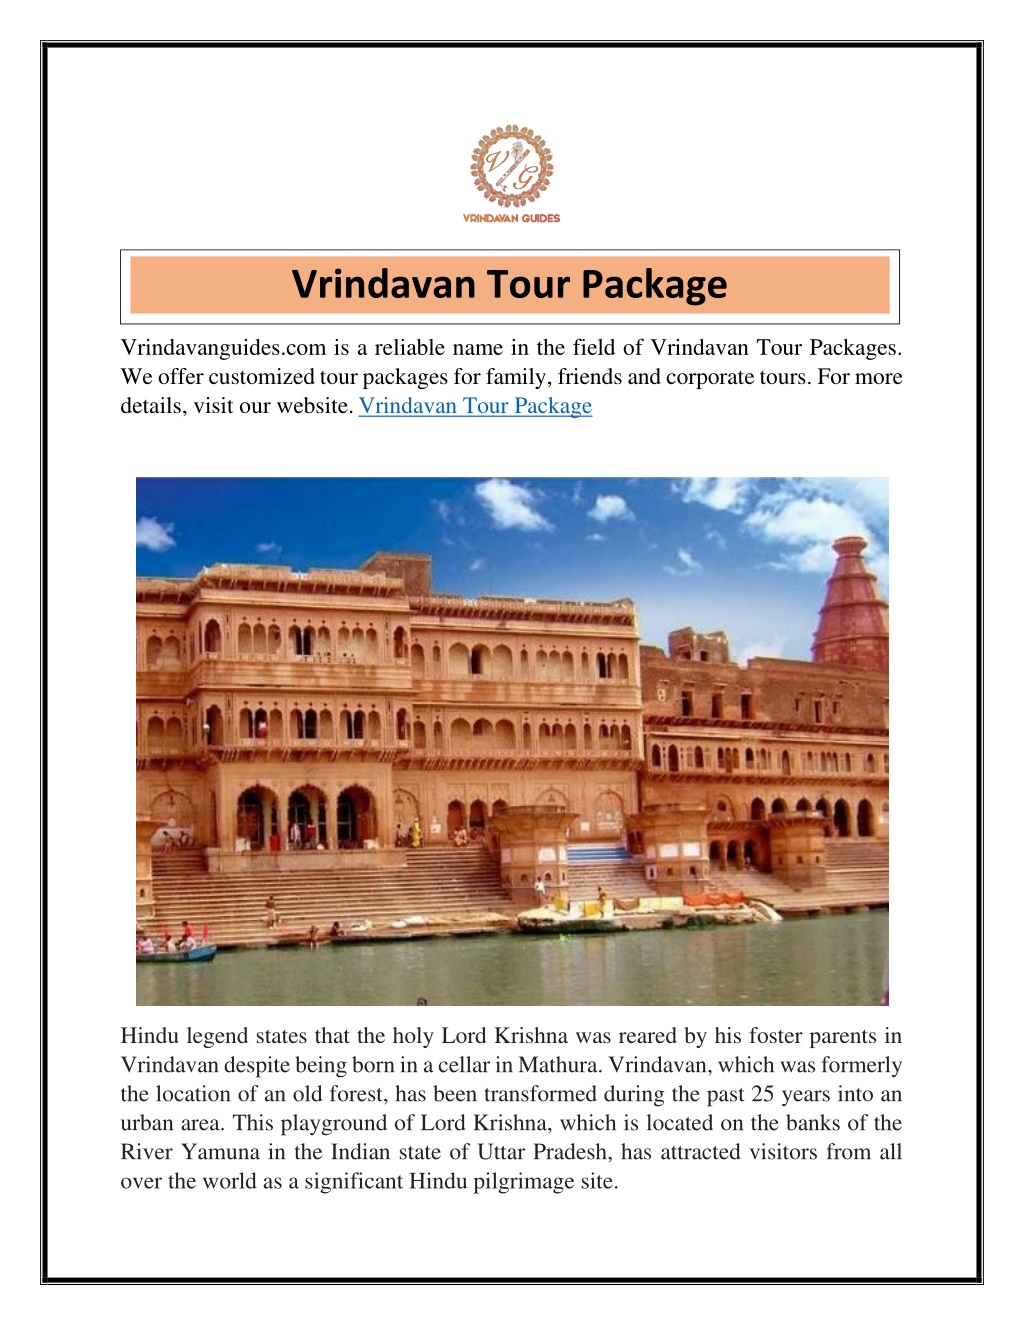 PPT - Vrindavan Tour Package Vrindavanguides PowerPoint Presentation ...